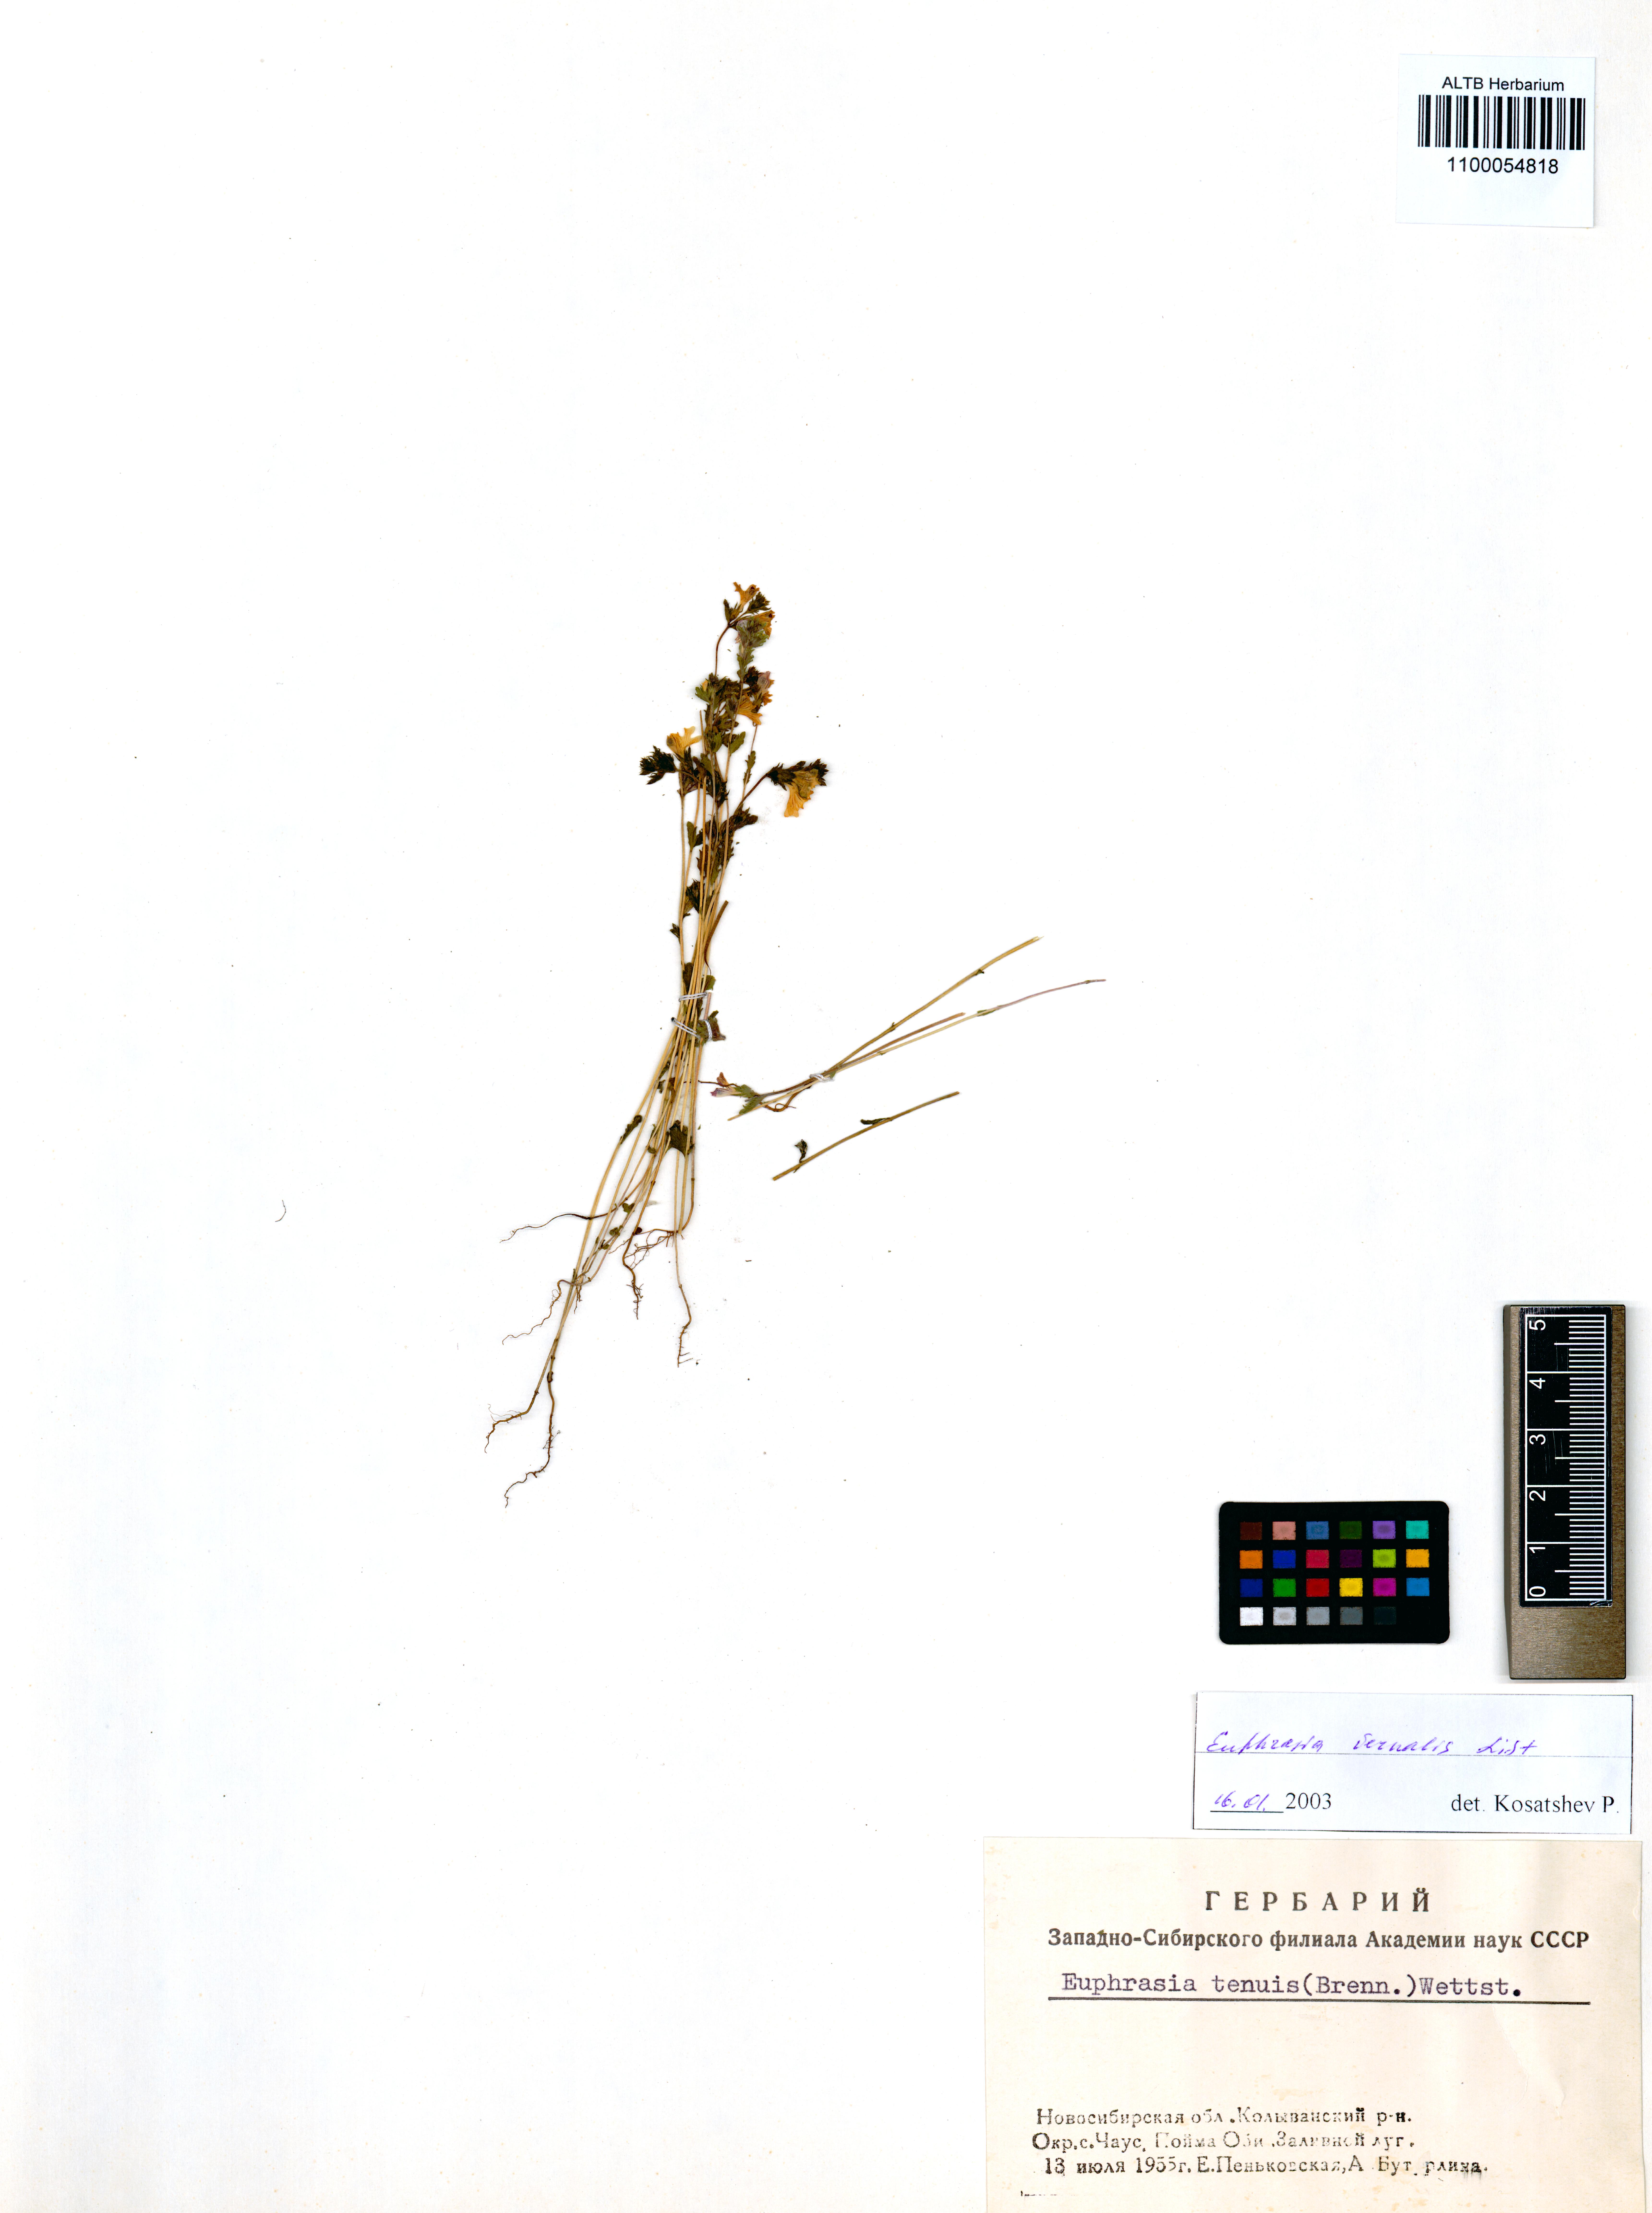 Euphrasia vernalis List